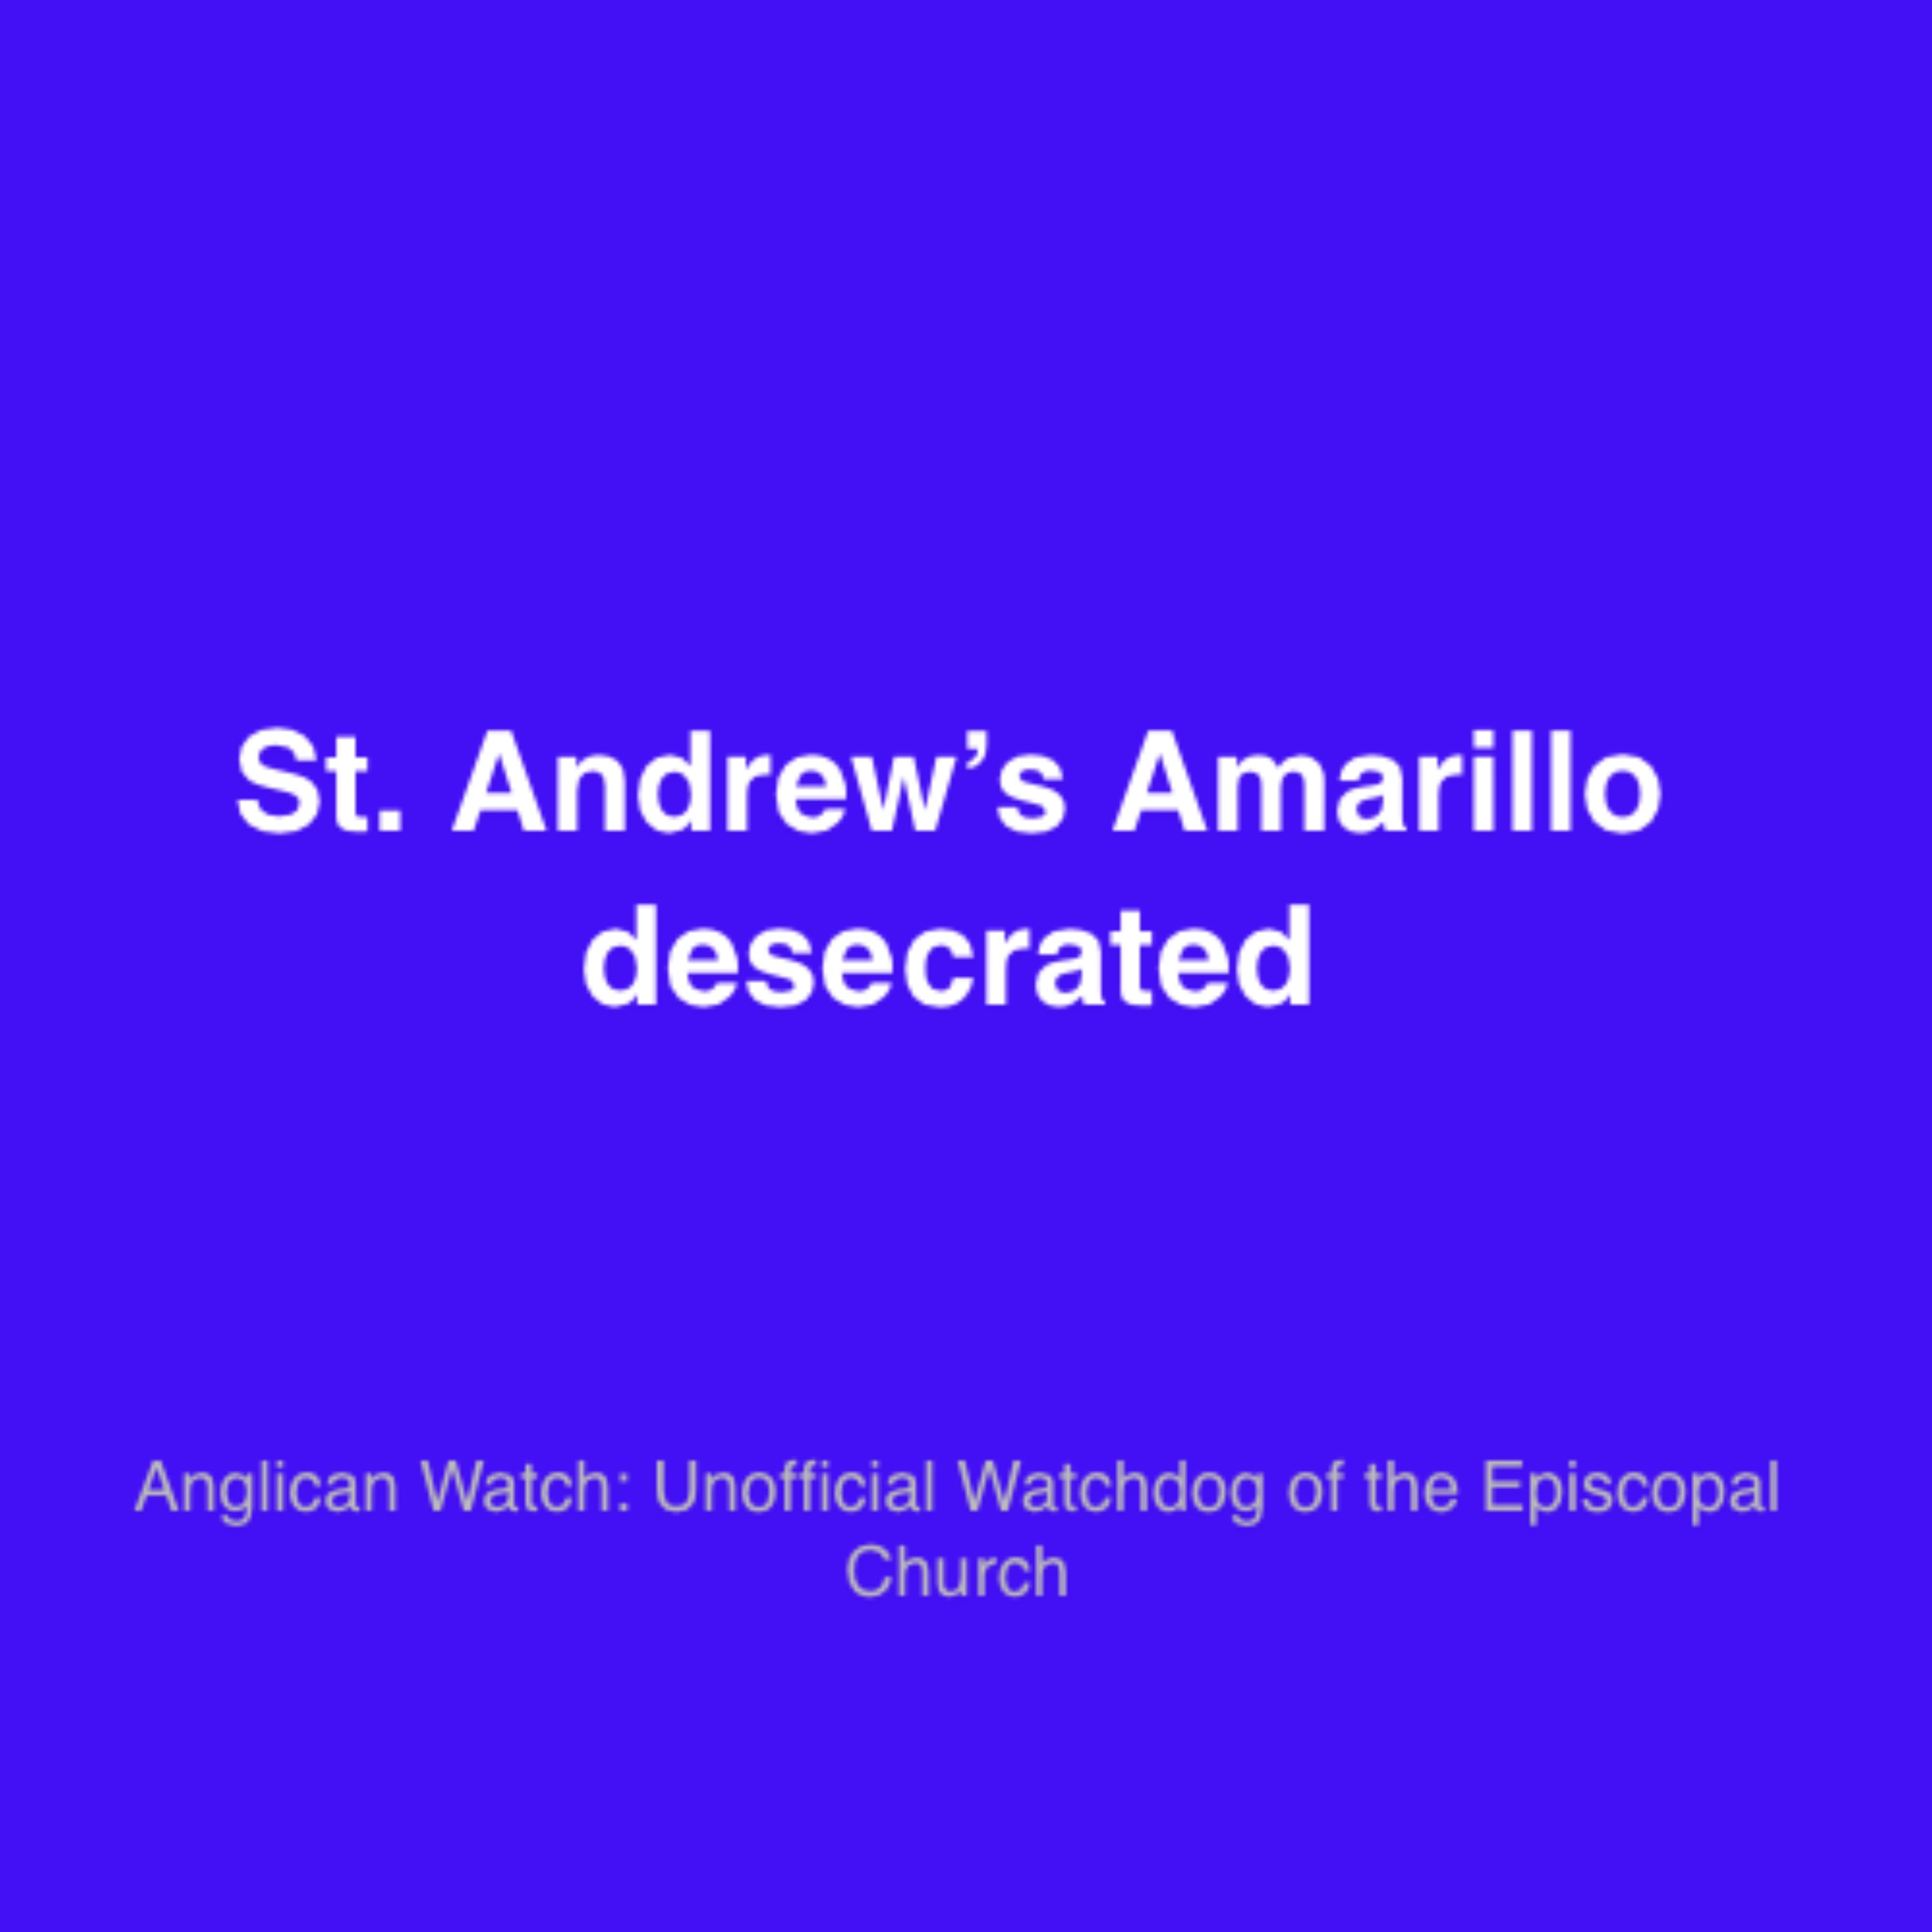 St. Andrew’s Amarillo desecrated